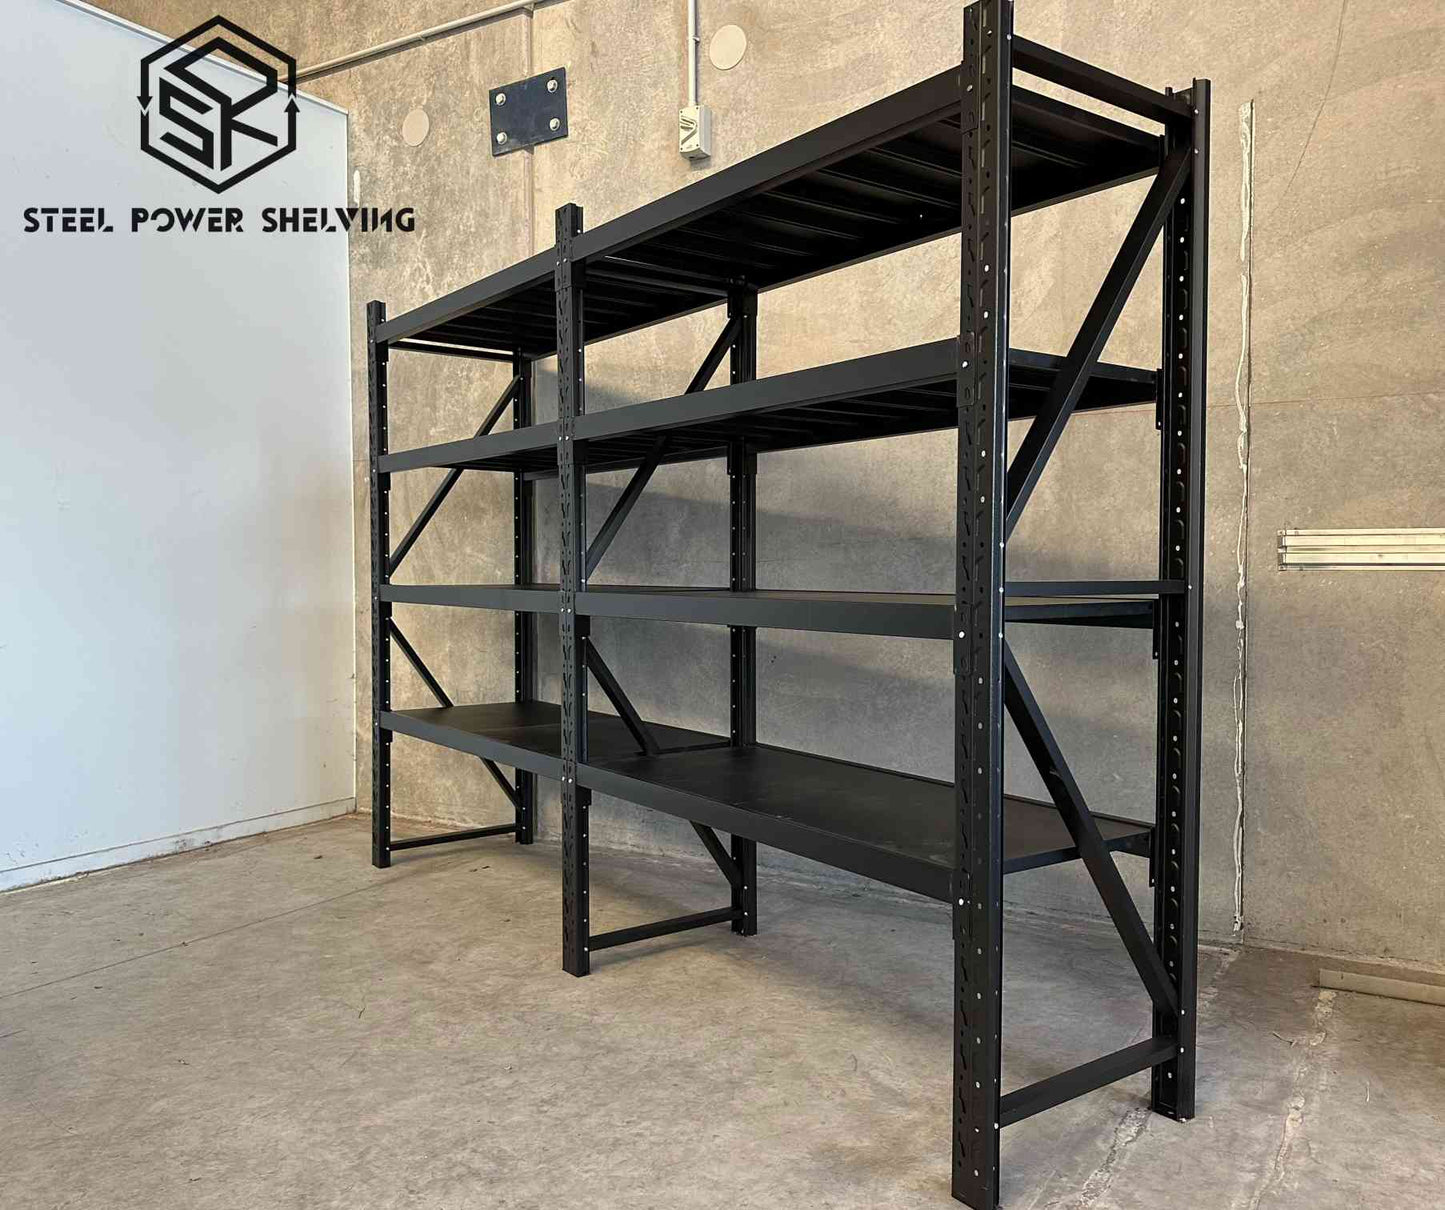 Shelf 2.0m(H)x3.0m(L)x0.6m(D)2000kg Longspan Shelving